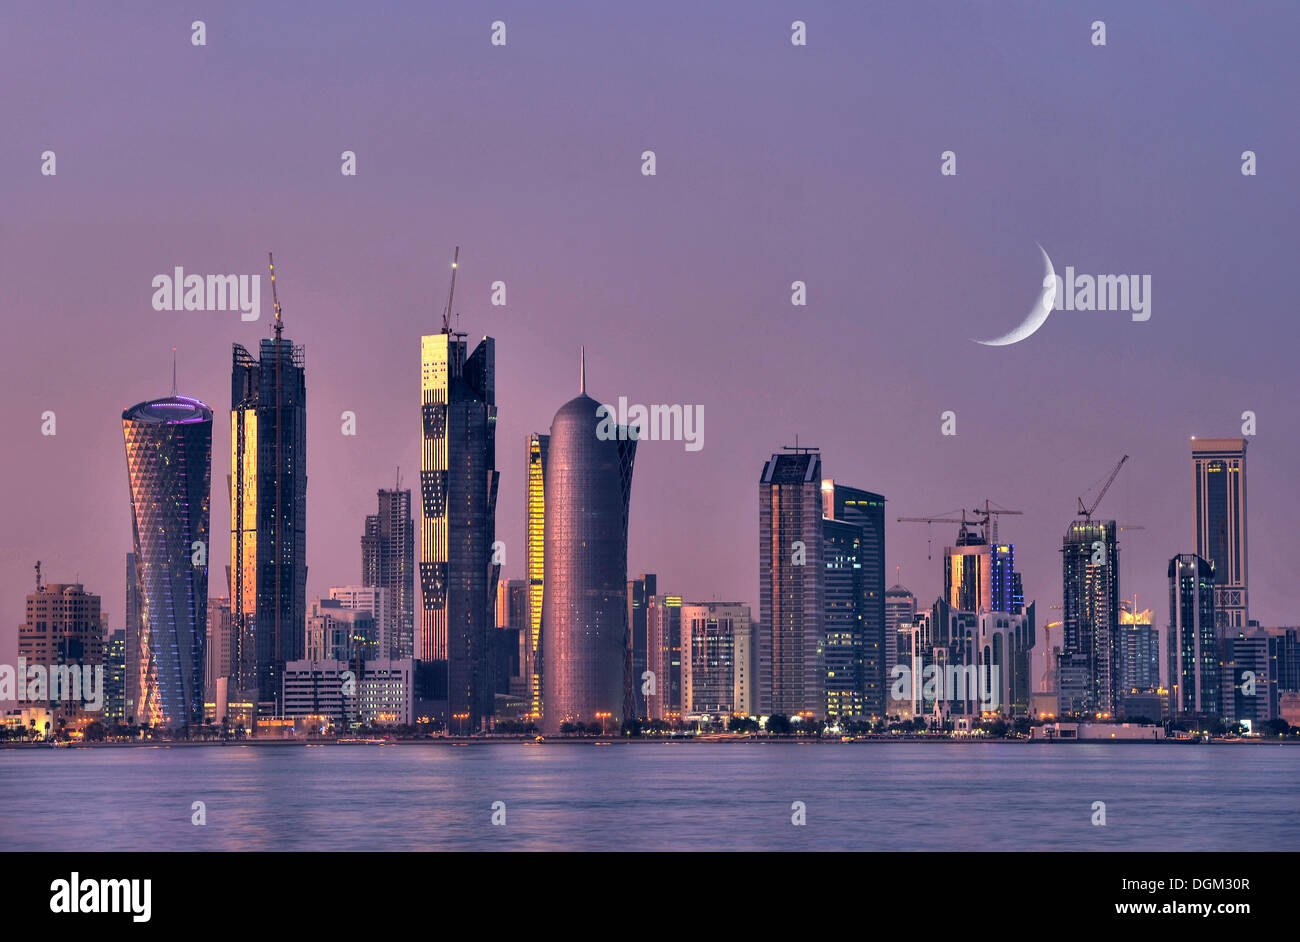 Dämmerung geschossen, Skyline von Doha, Tornado Tower, Peilturm, Frieden Türme, Al-Thani Turm, Mond, Doha, Qatar, Persischer Golf Stockfoto